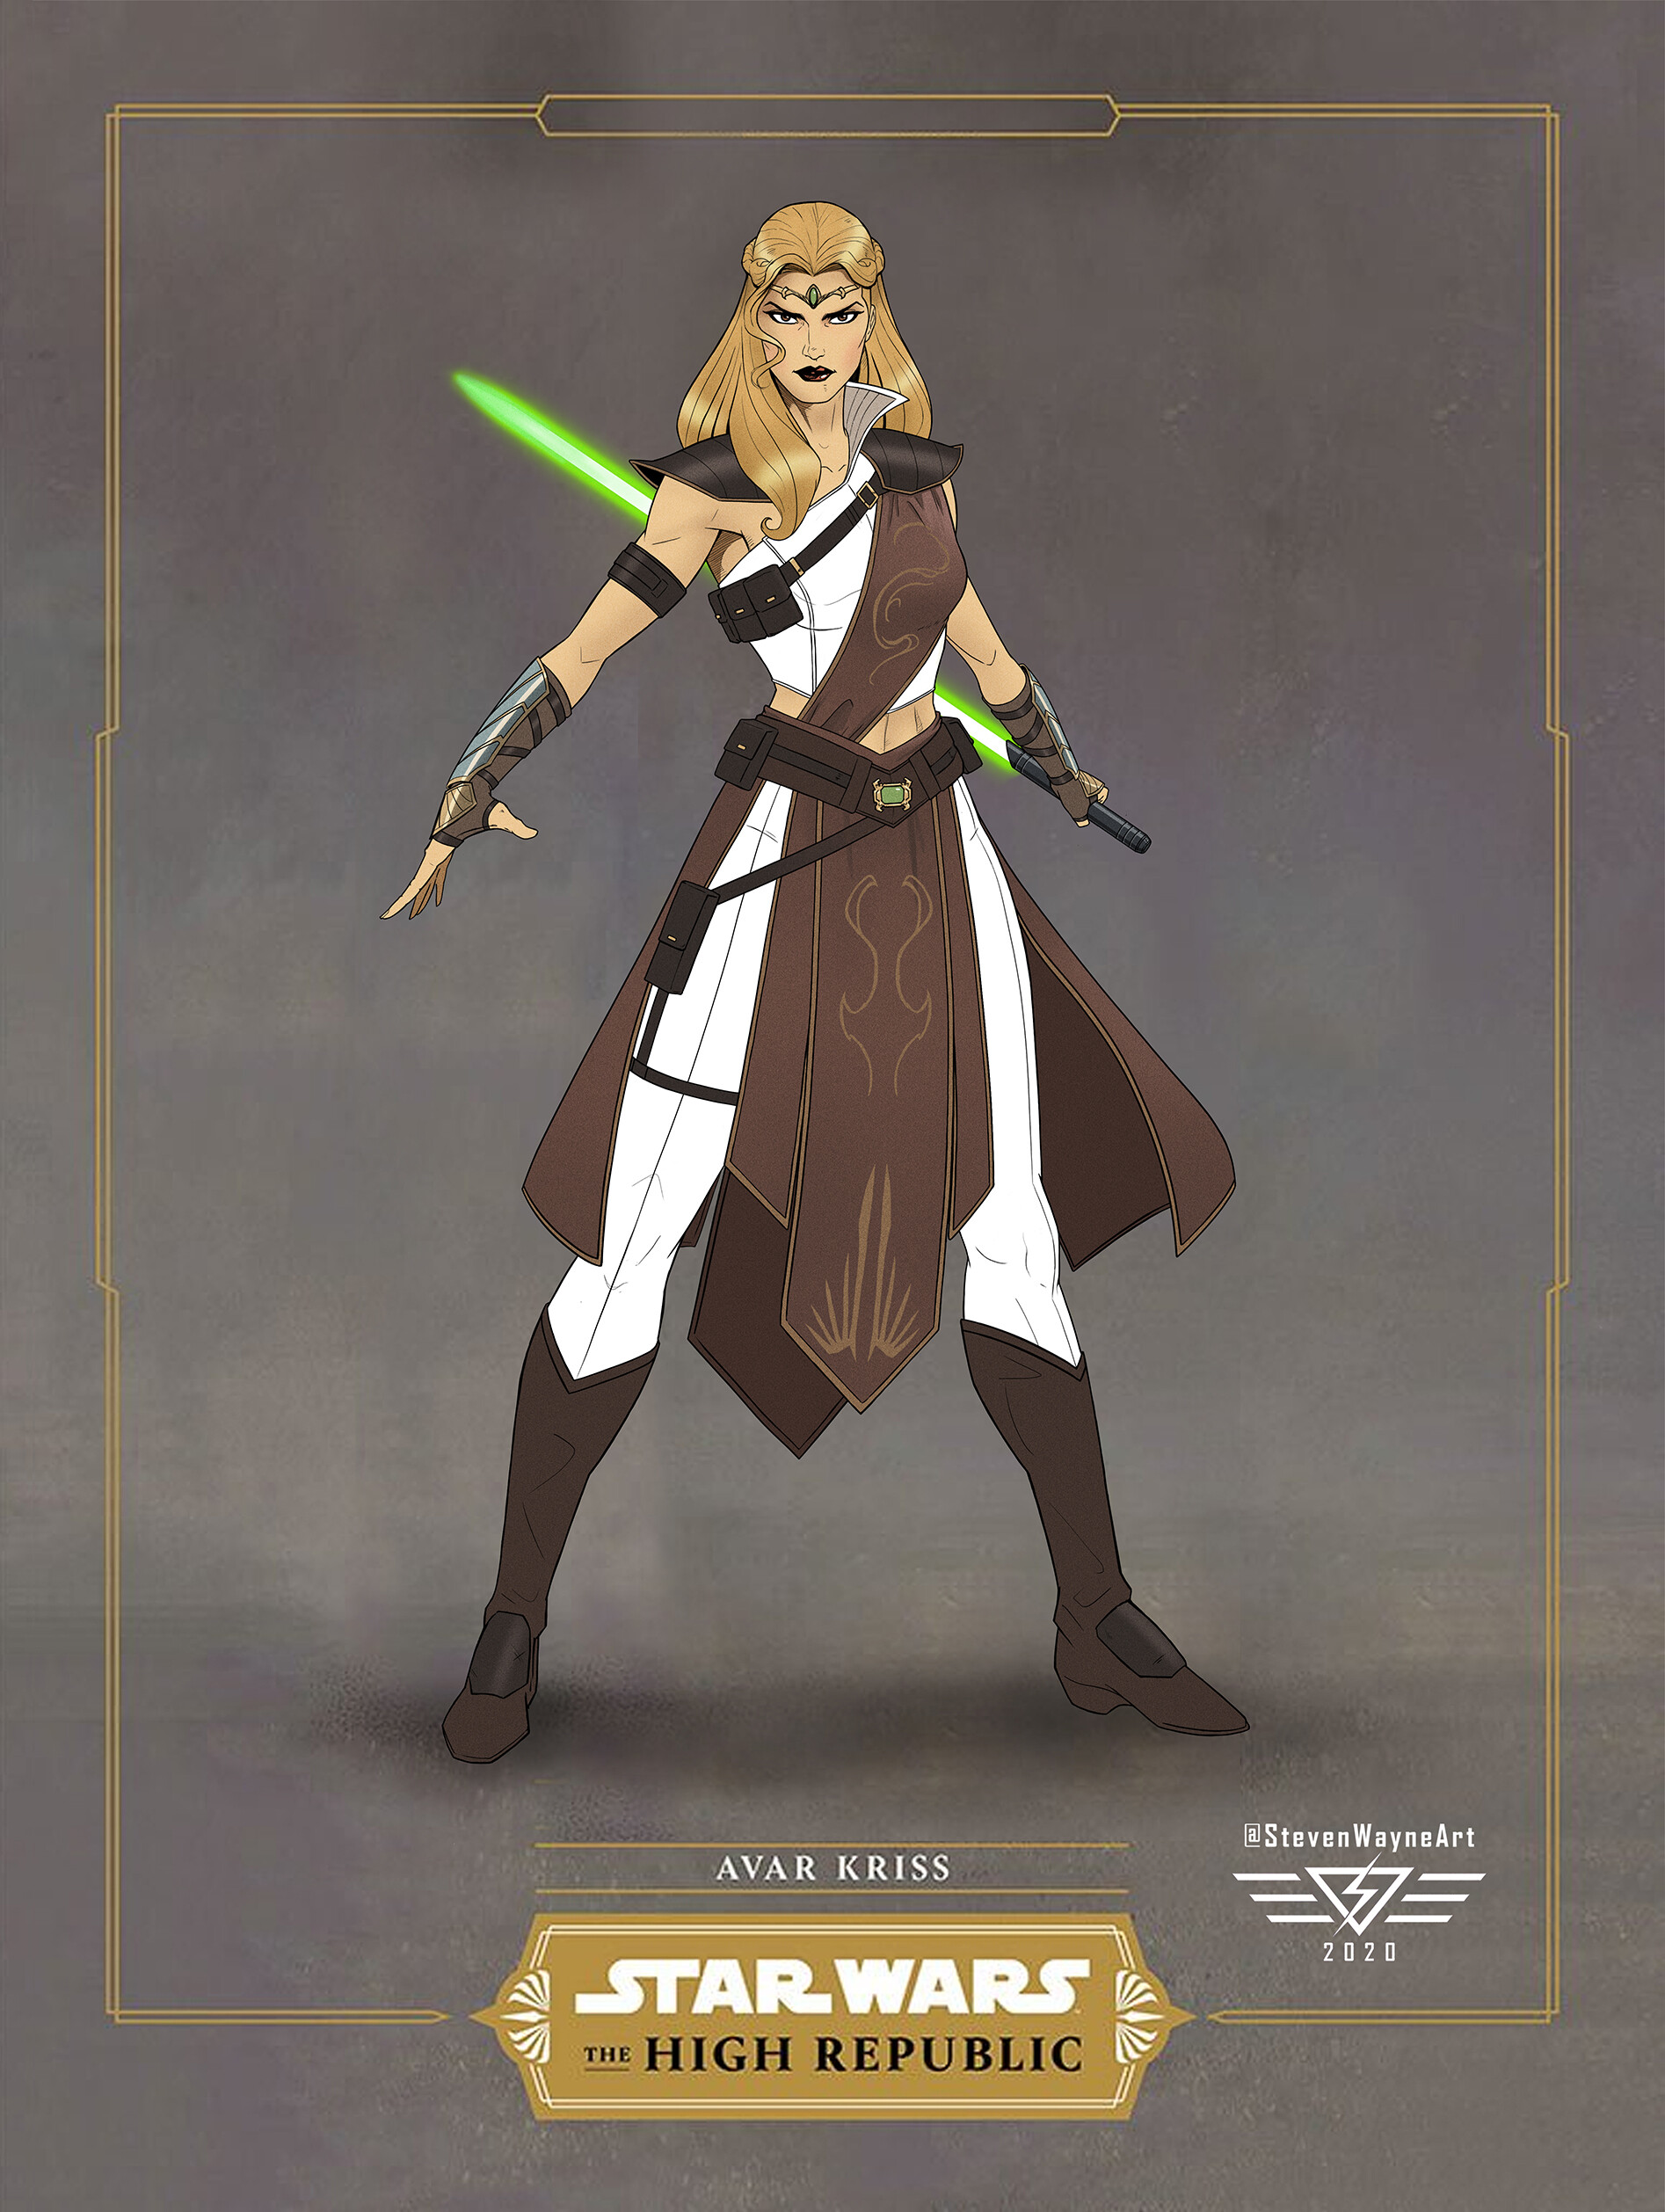 Star Wars High Republic Minifigure Details about   **NEW** Custom Printed JEDI AVAR KRISS 